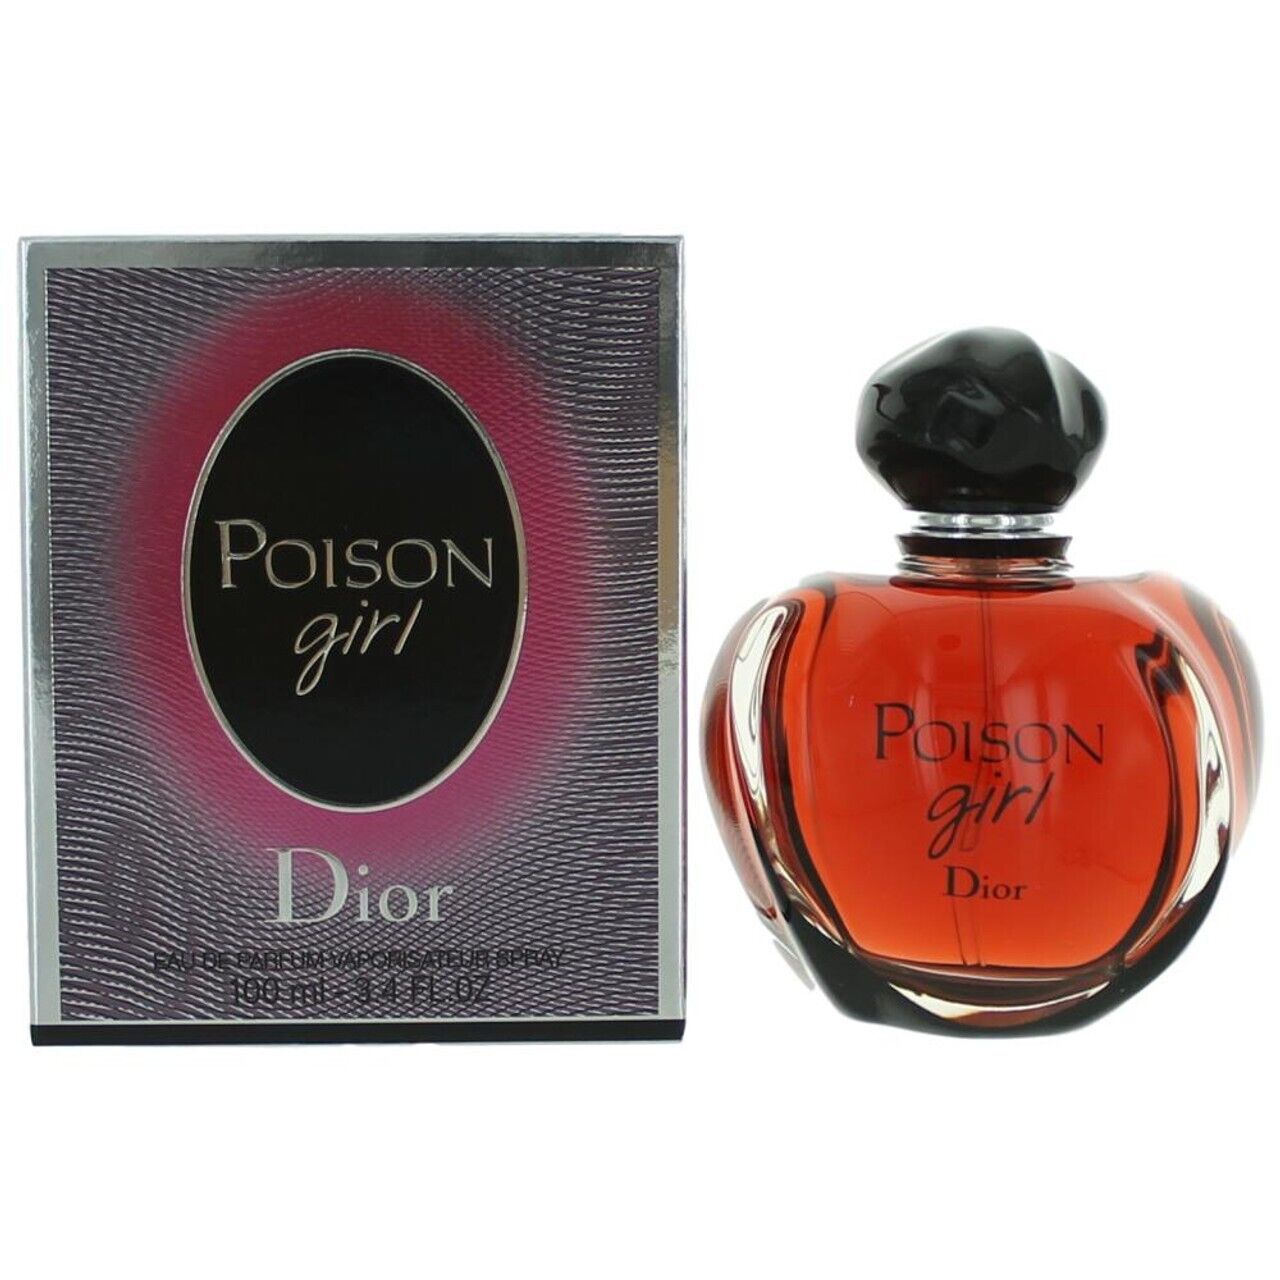 Poison Girl by Christian Dior, 3.4 oz EDP Spray for Women SEALED BOX